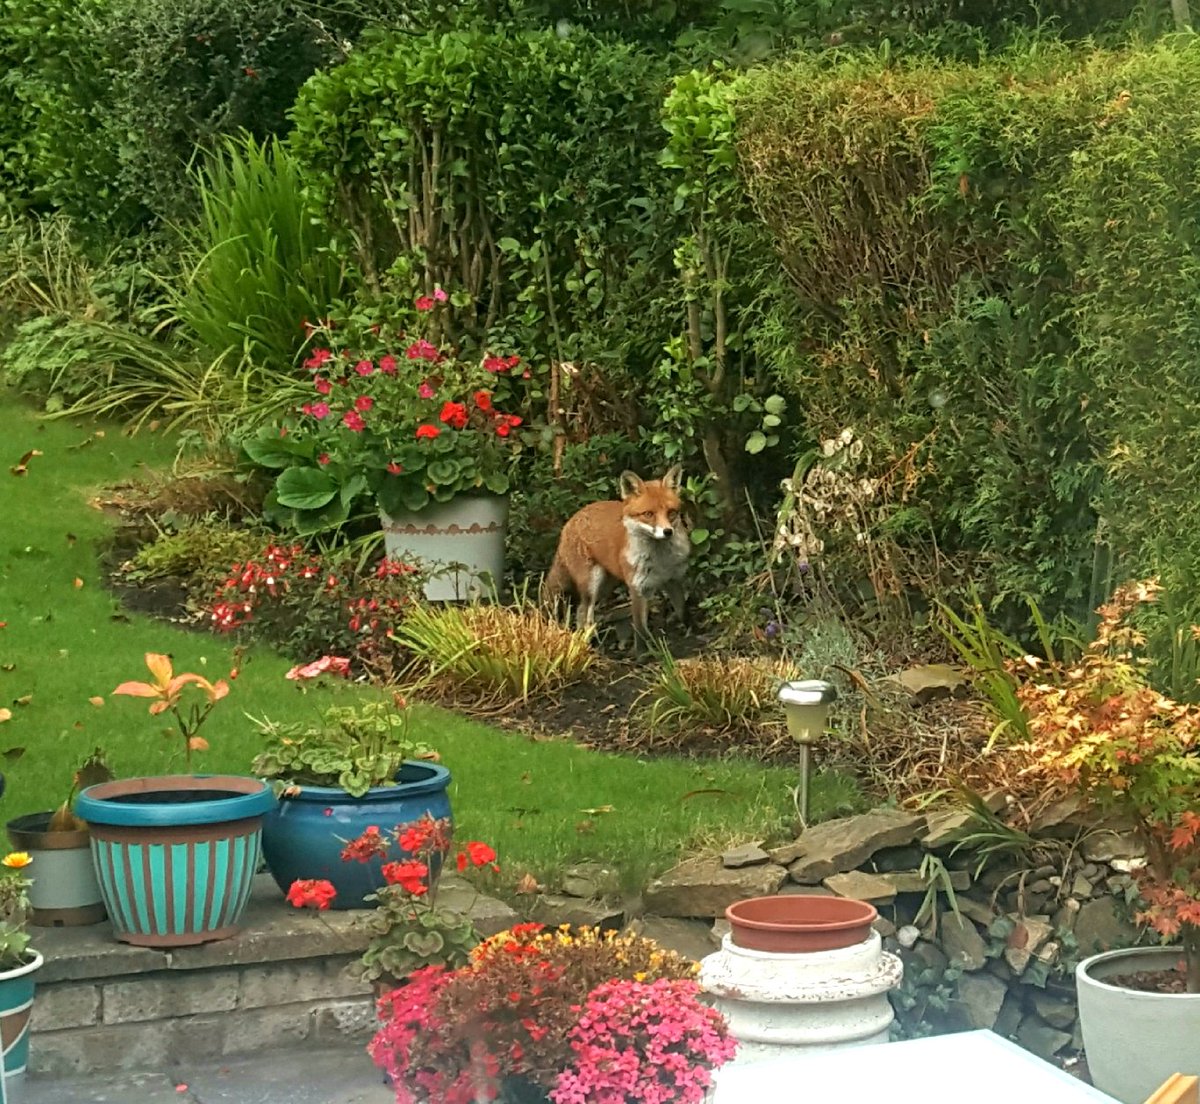 Foxy visitor to my #sheffield #garden this morning!
#autumn #urbanfox #365DaysWild #TwitterNatureCommunity #yorkshire #autumnvibes @BBCLookNorth @YorkshireWildlife @WoodlandTrust @TheMontyDon